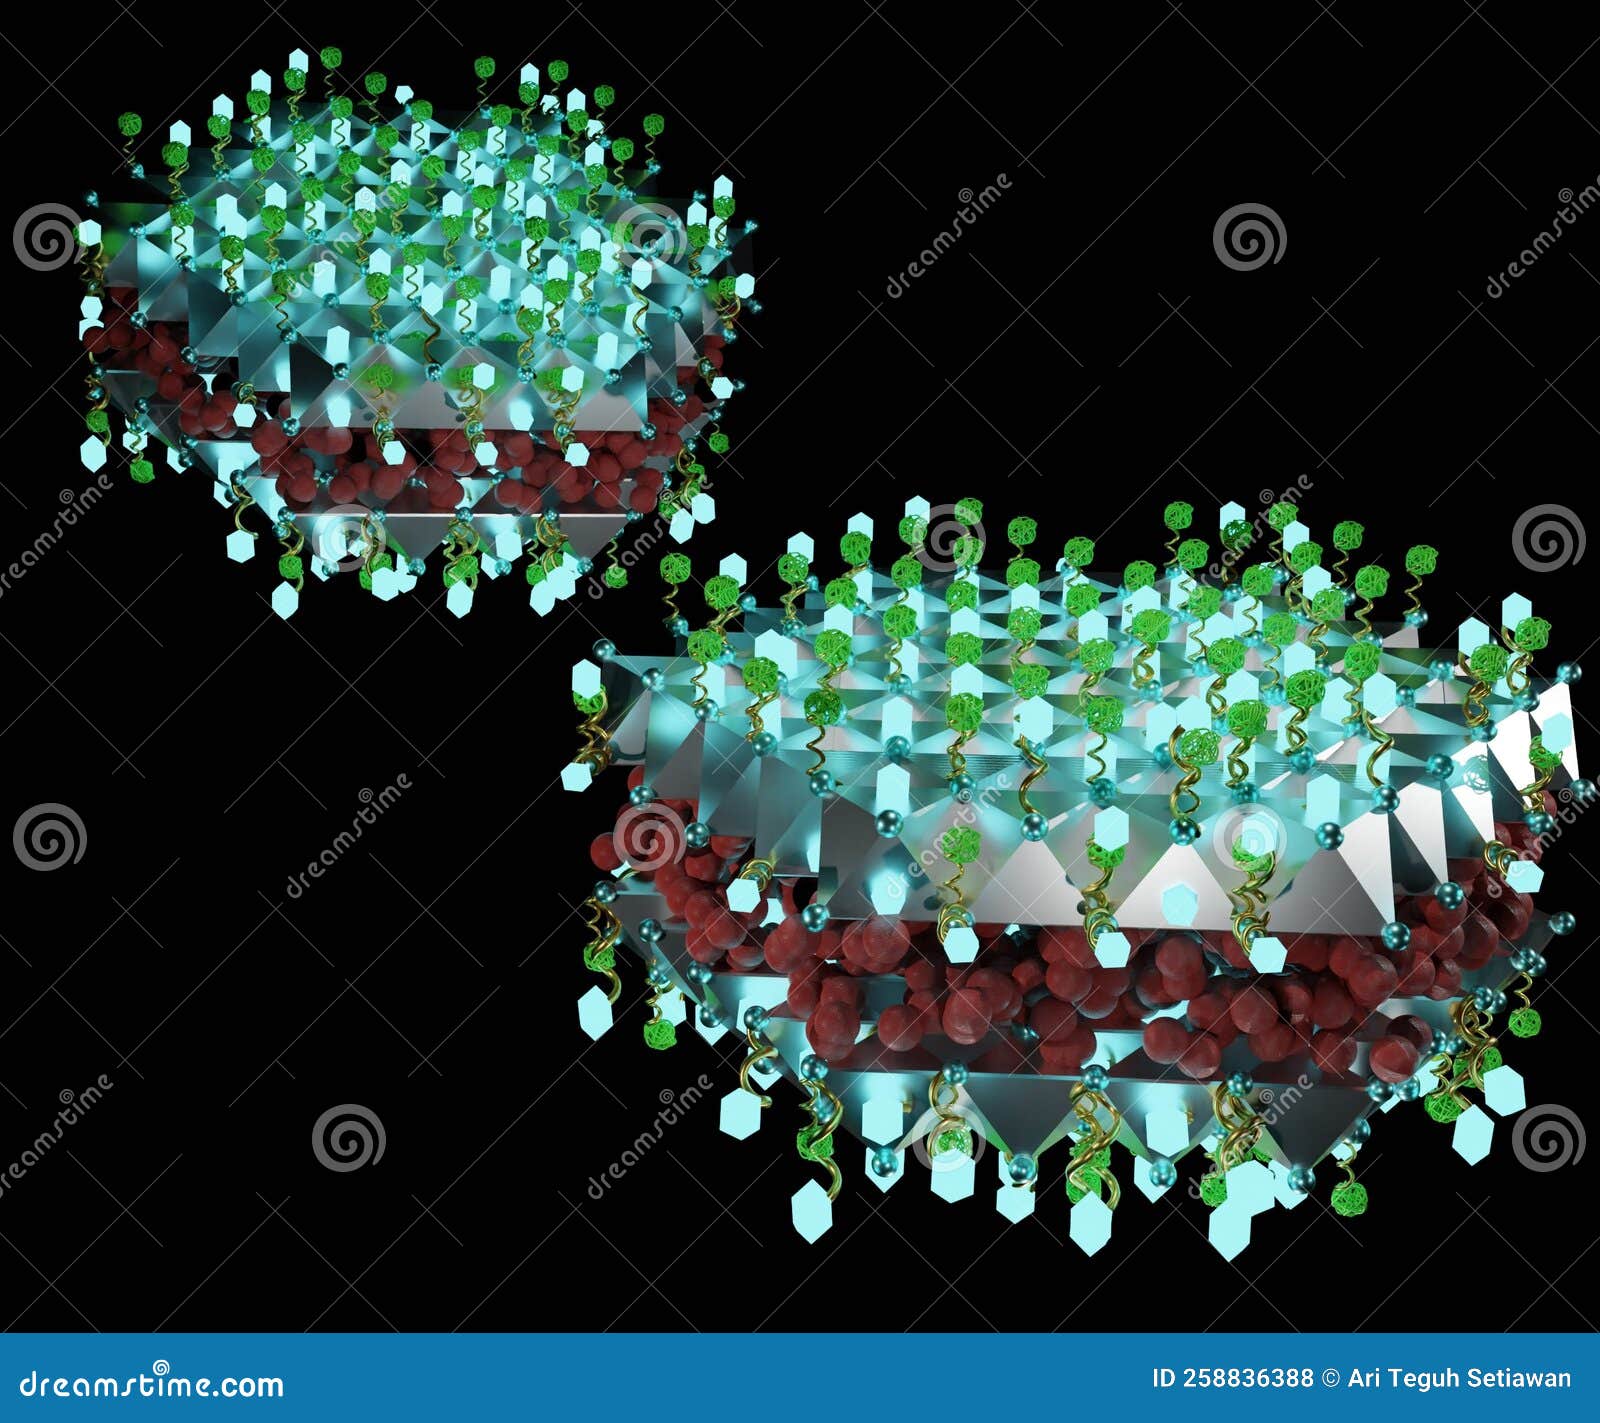  layered double hydroxide (ldh) nanoplatform with nanodrug, proteins and biosensor conjugated